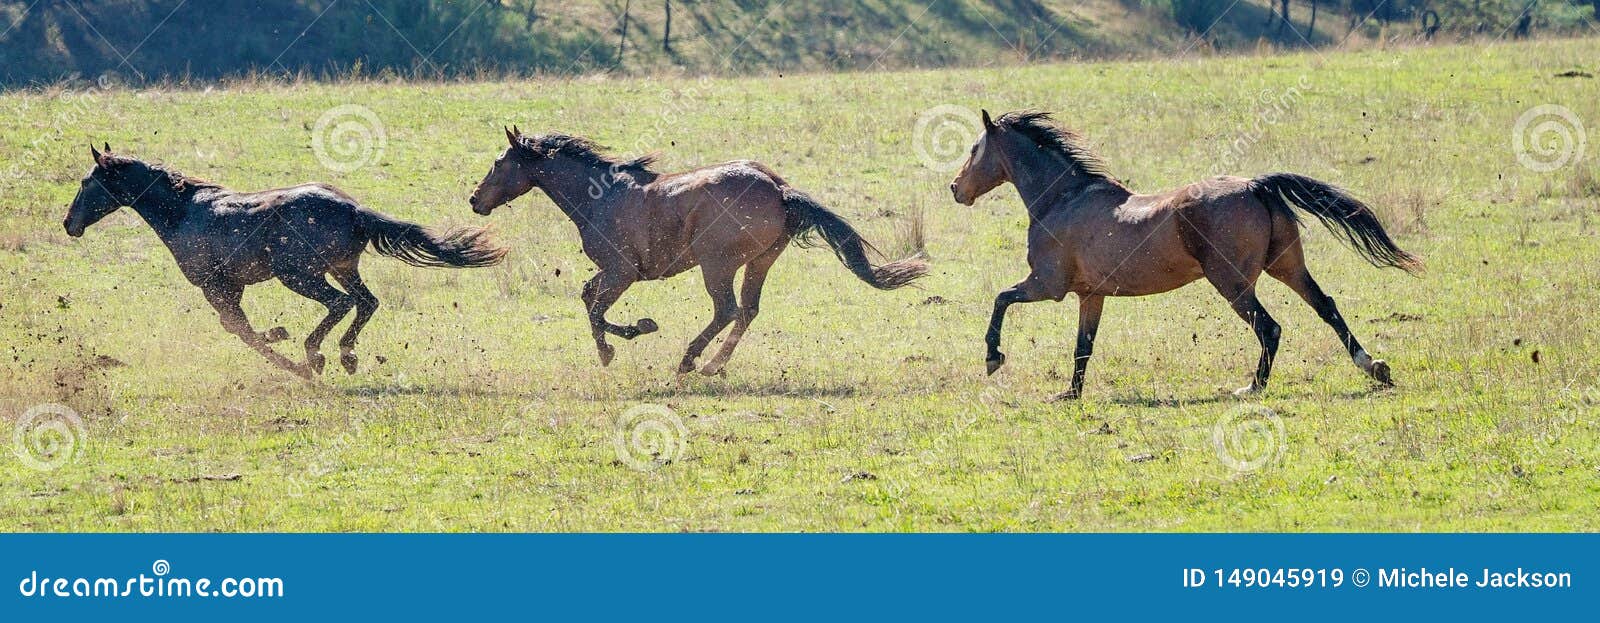 Three Galloping Wild Horses Stock Image Image Of Light Equine 149045919